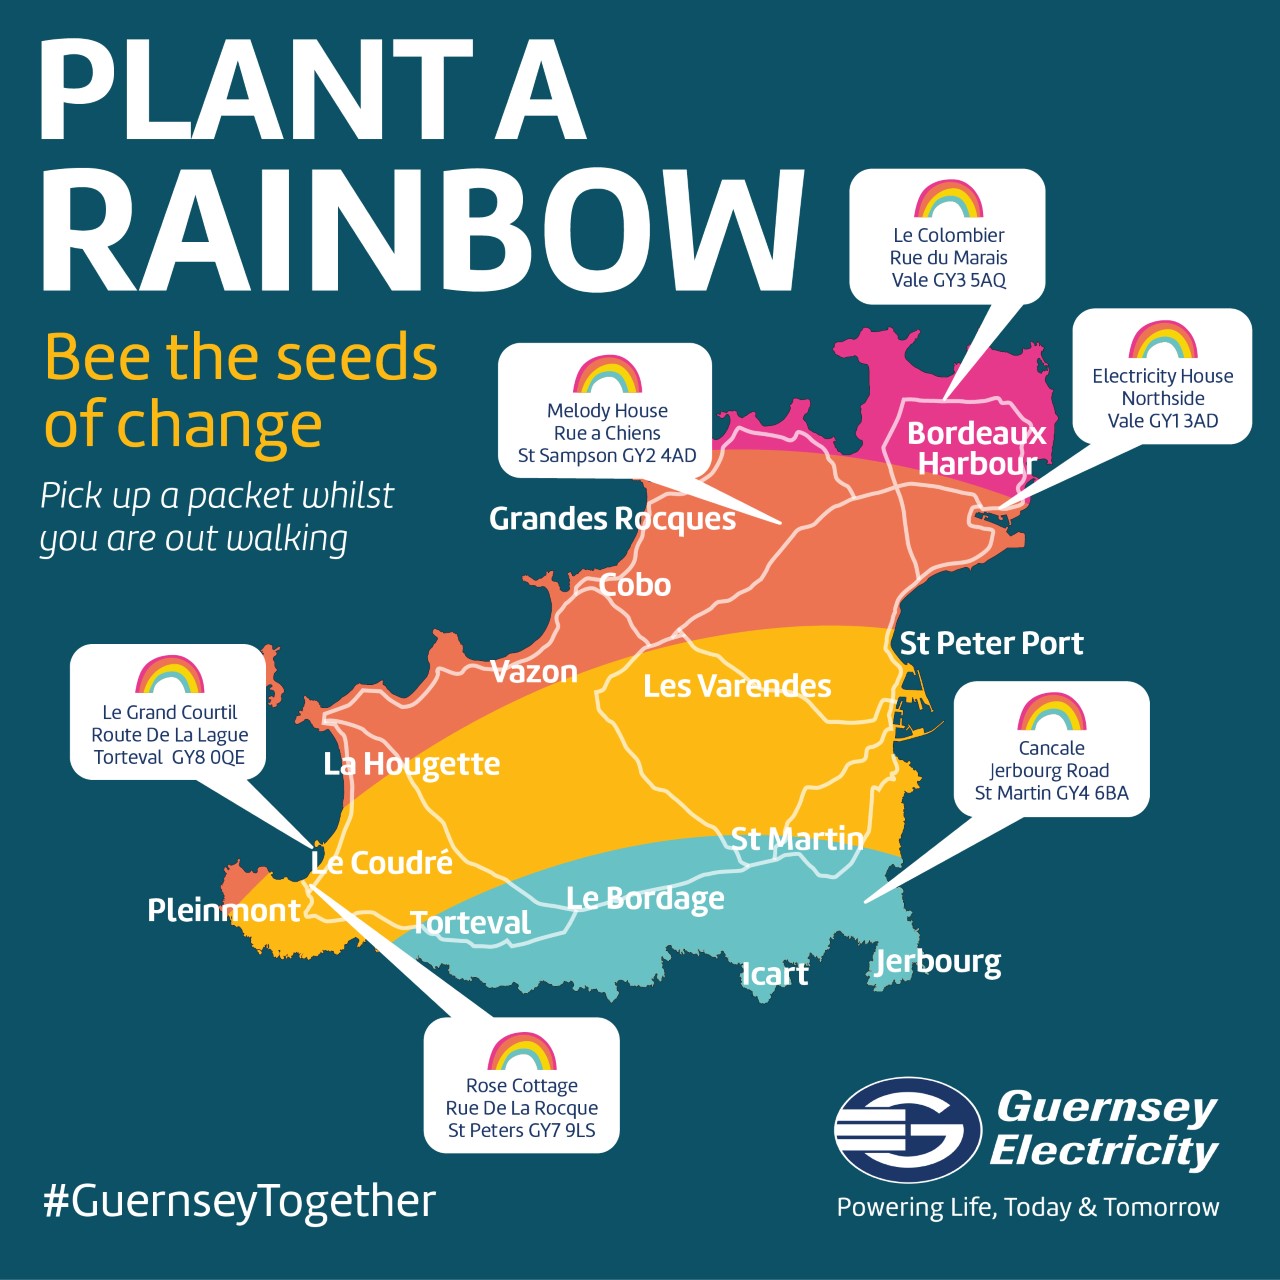 Guernsey Electricity hedge veg map